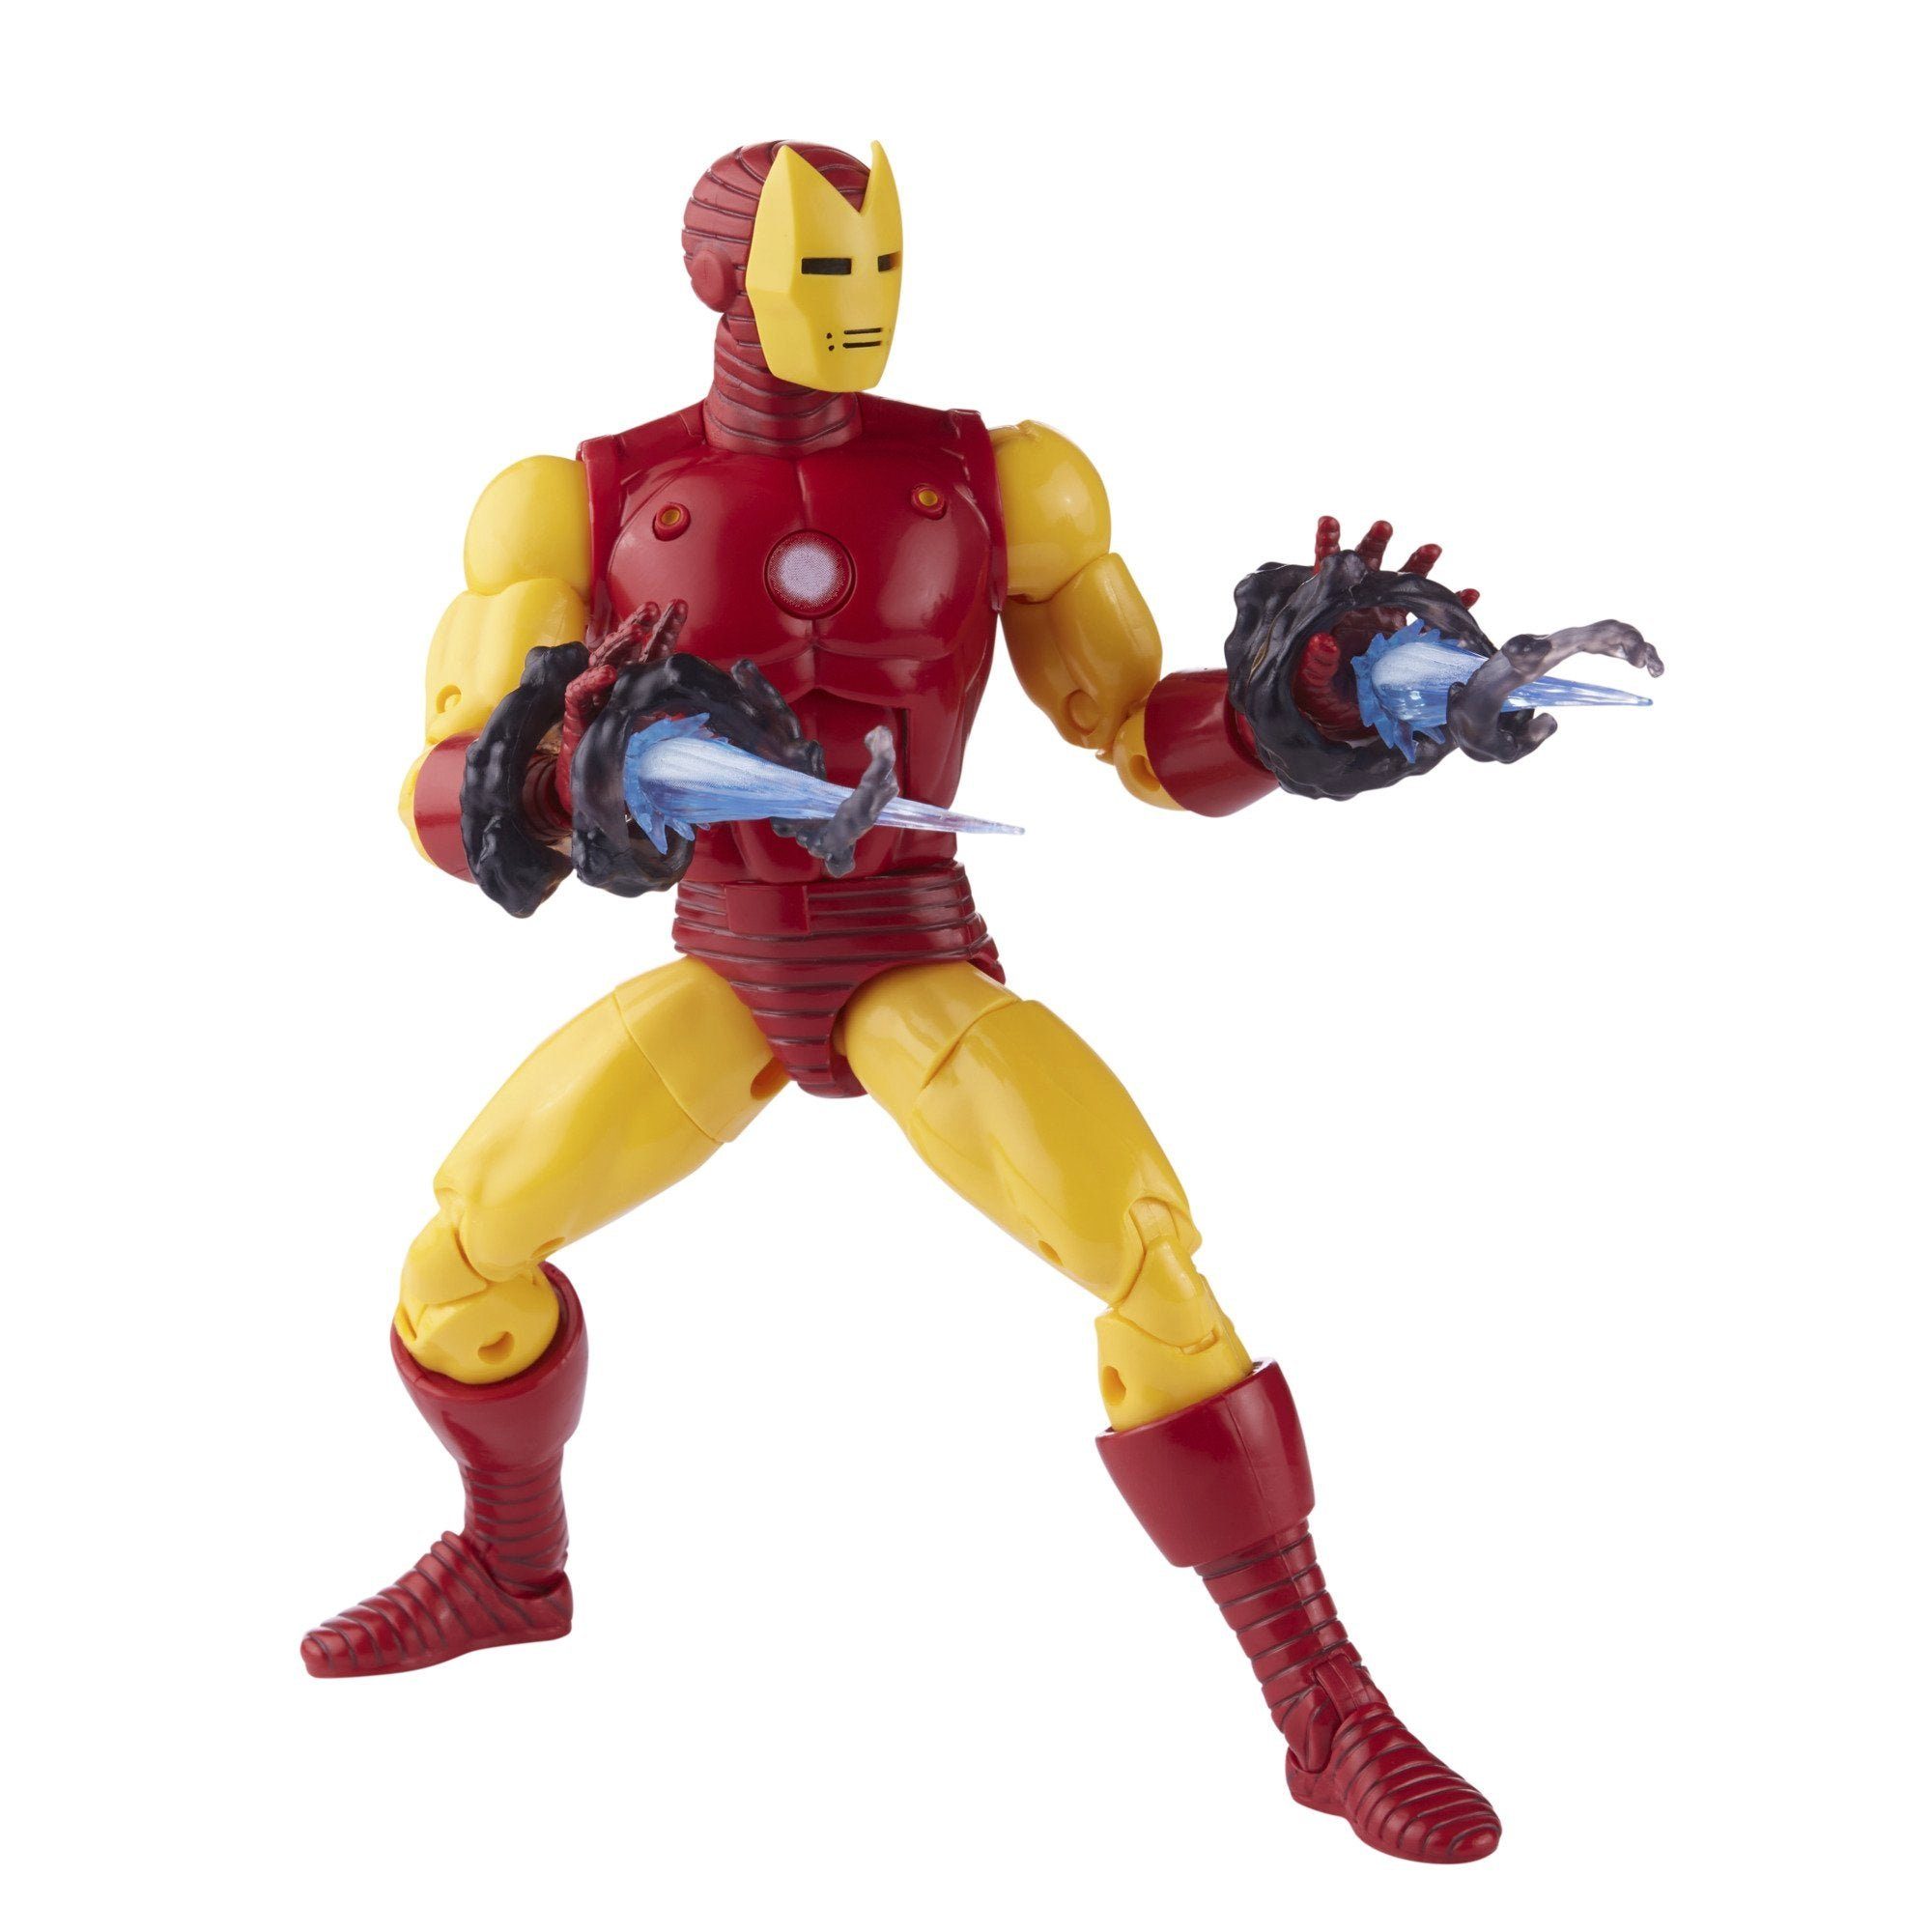 Hasbro Spielfigur Marvel Legends Series 1 - 20. Jubiläum - Iron Man - 15 cm, Series 1 - 20th Anniversary